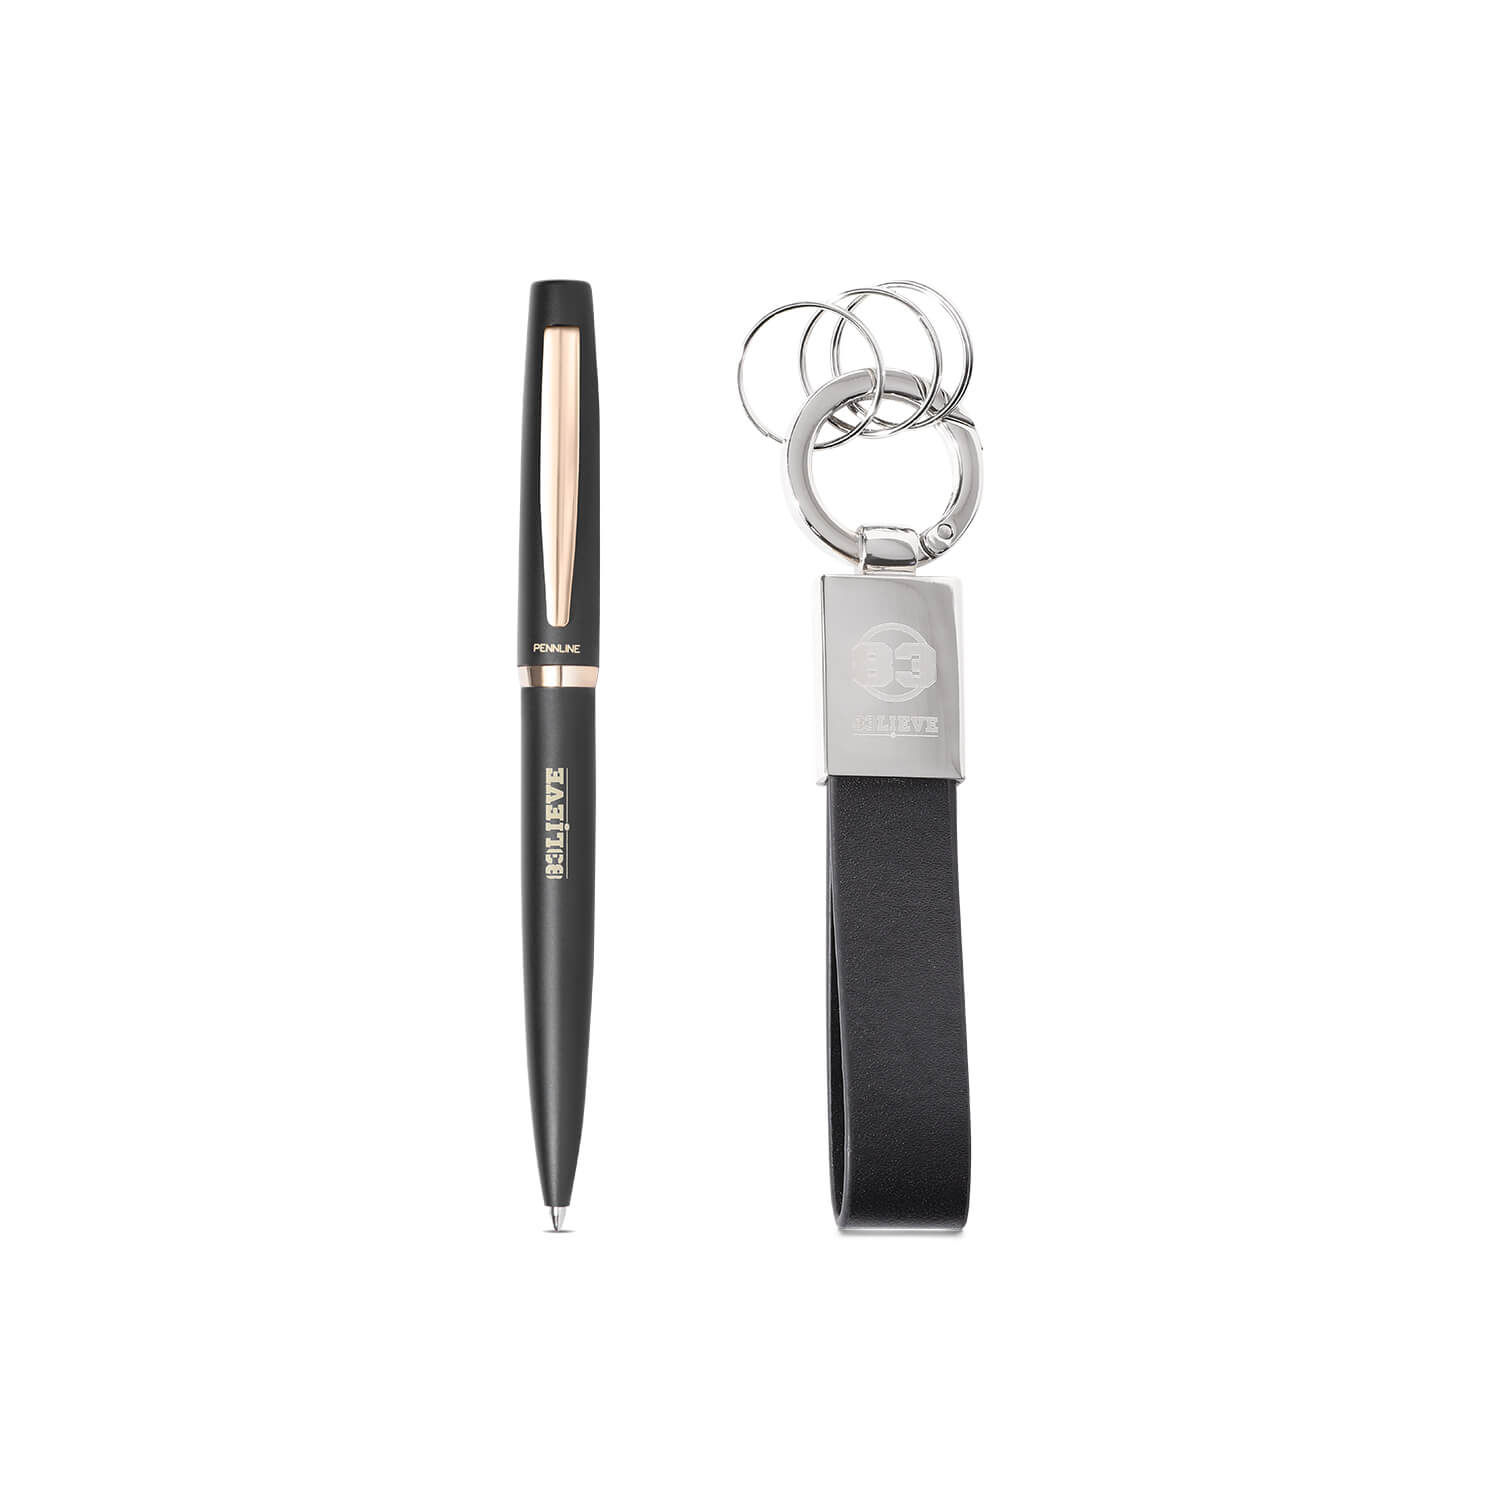 Pennline Gift Set 83 Pennline Ballpoint Pen And Keychain - Black, Gold And Chrome